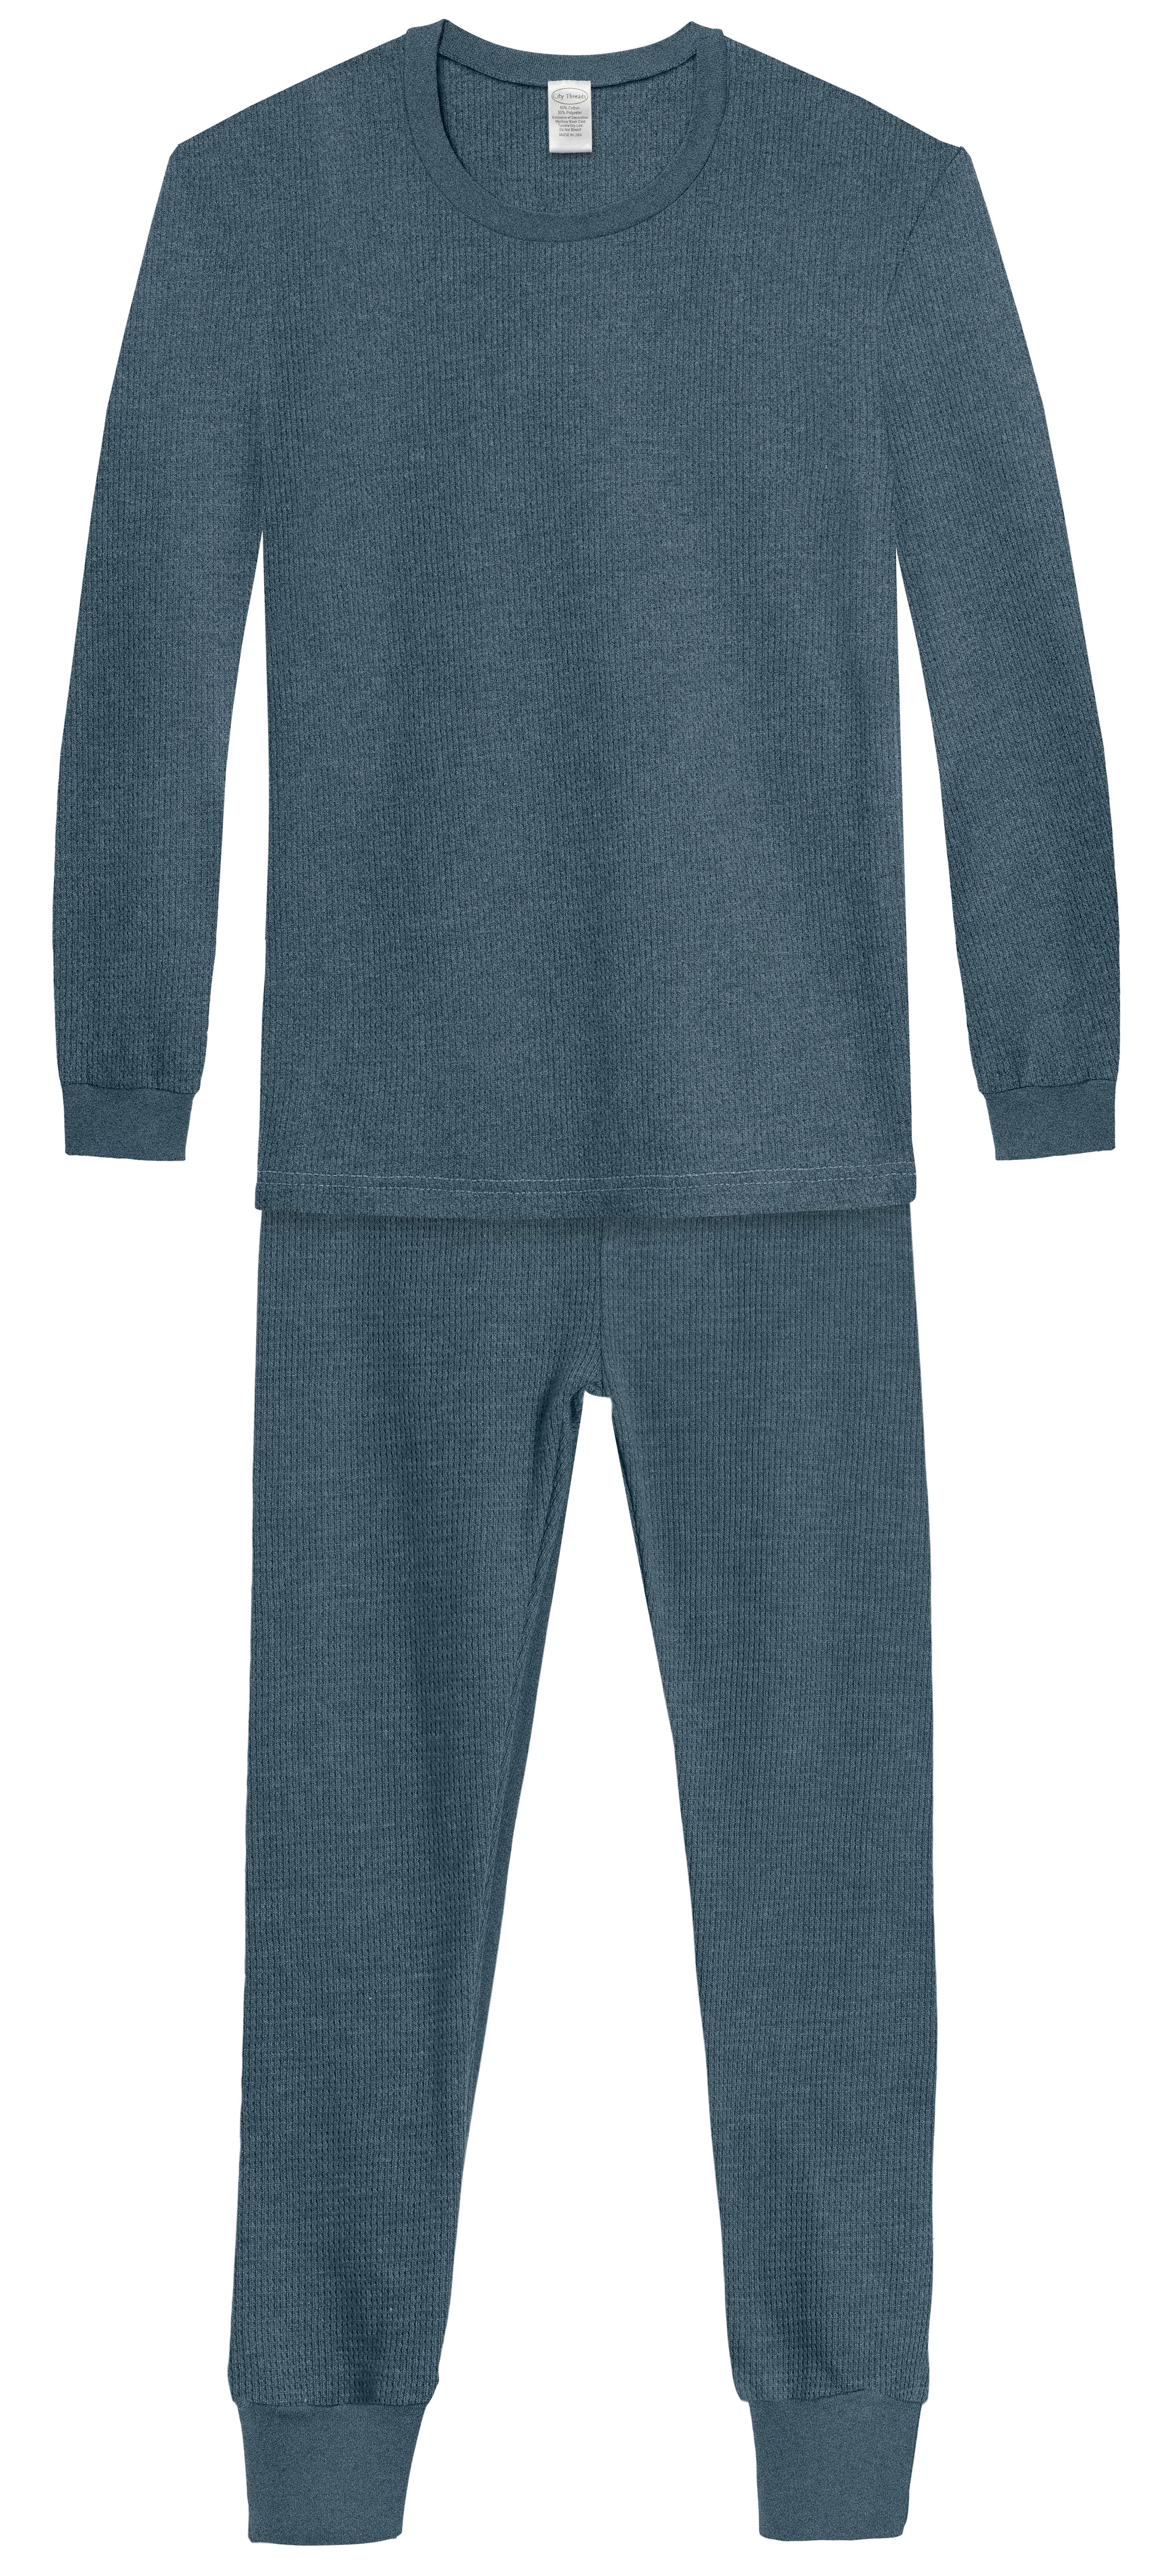 Mens Thicken Cotton Top & Bottom 2PC Set Pajamas Thermal Long Johns  Underwear 